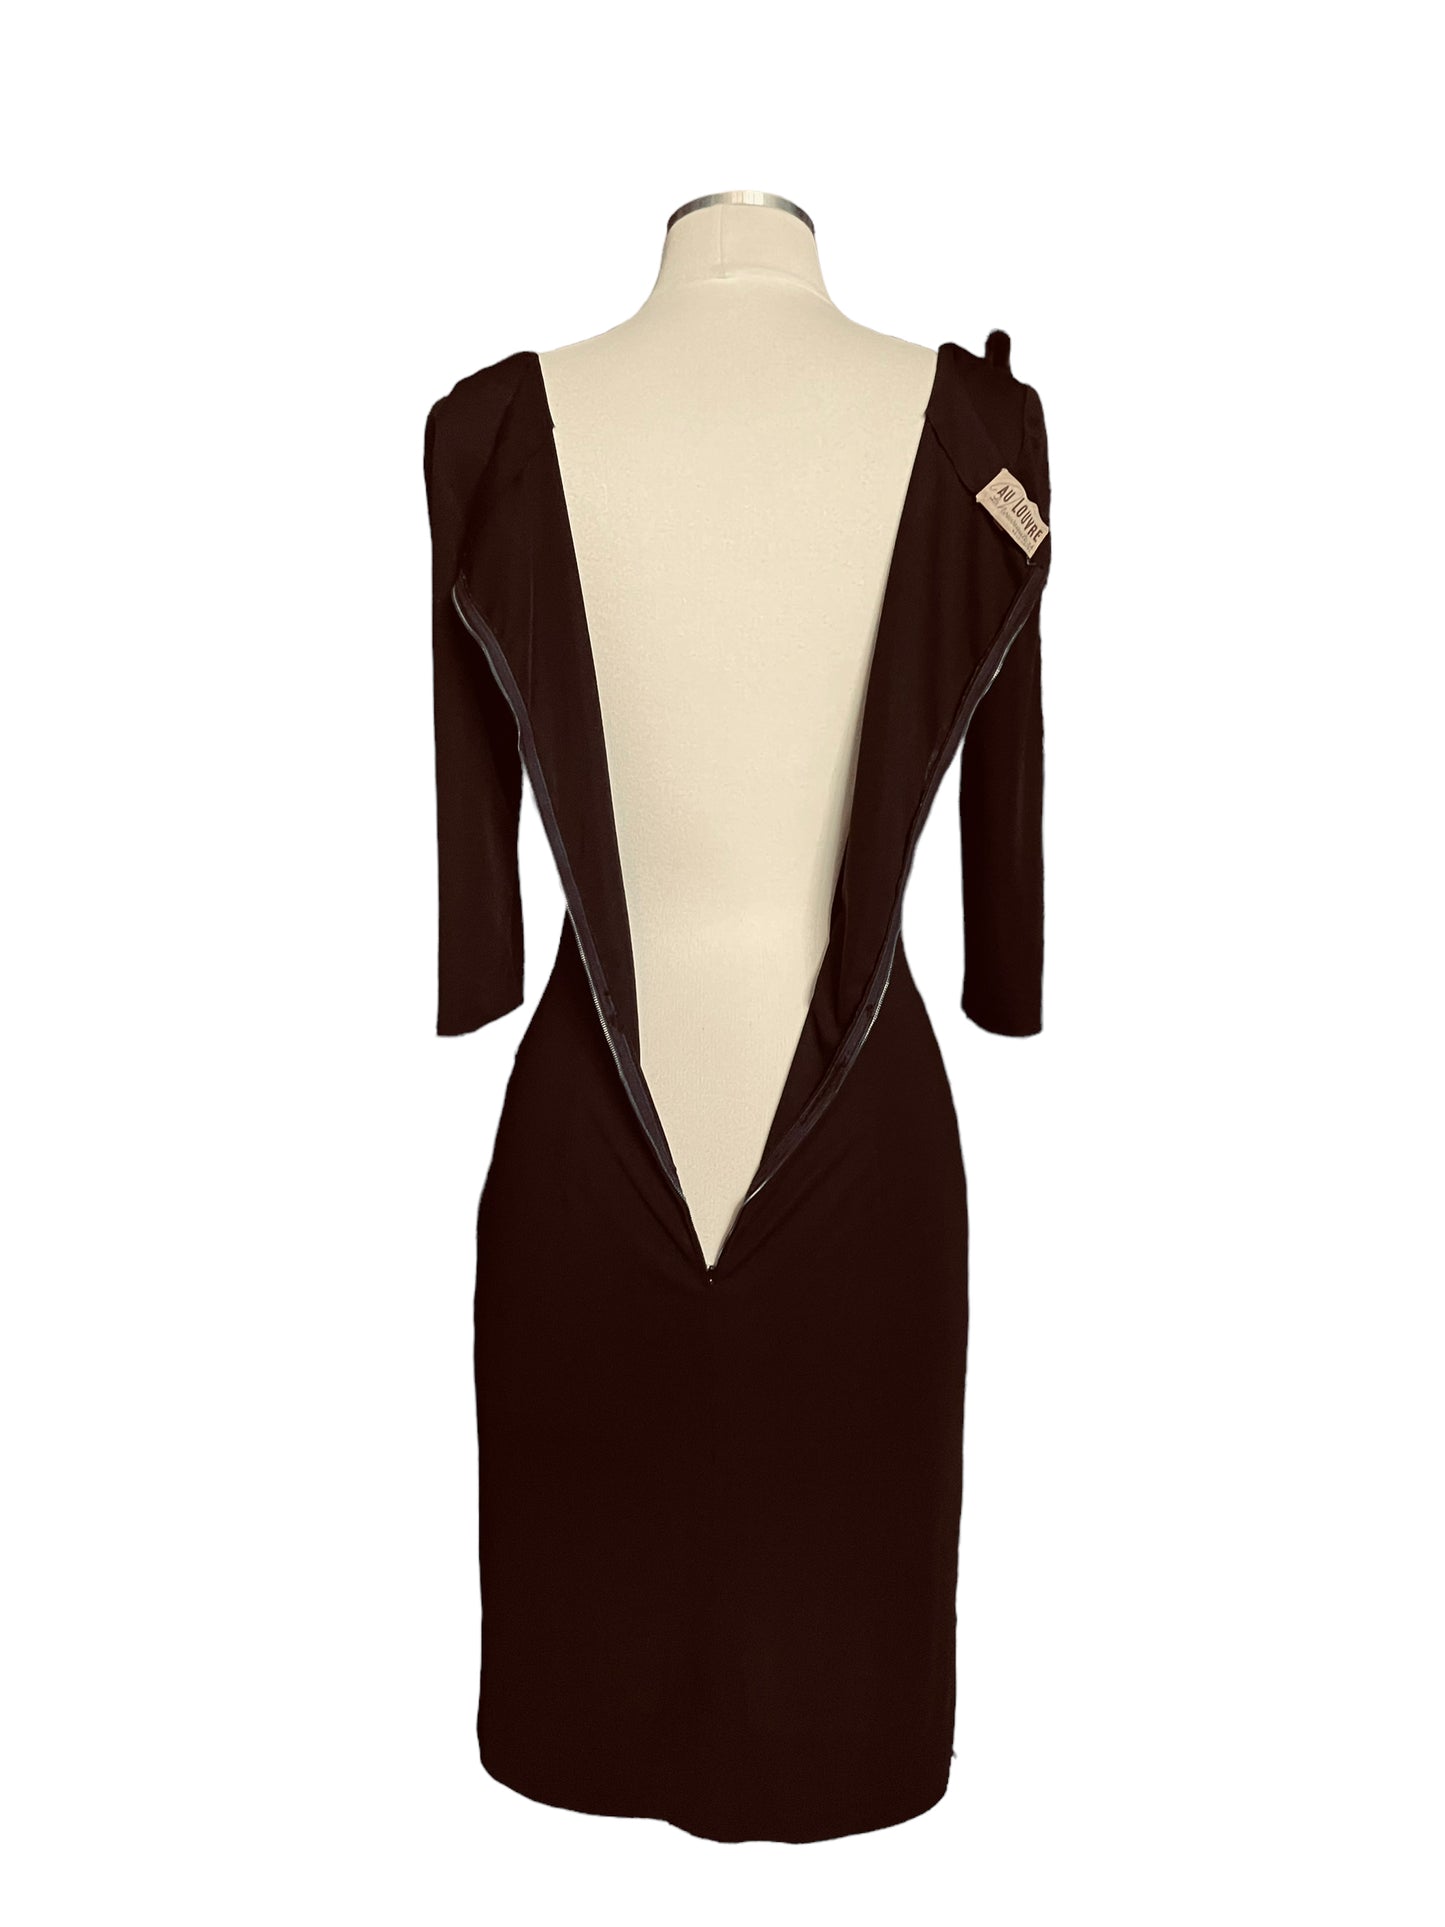 Open back view of Vintage 1940s Au Louvre Black Dress |  Barn Owl Vintage | Seattle Vintage Dresses